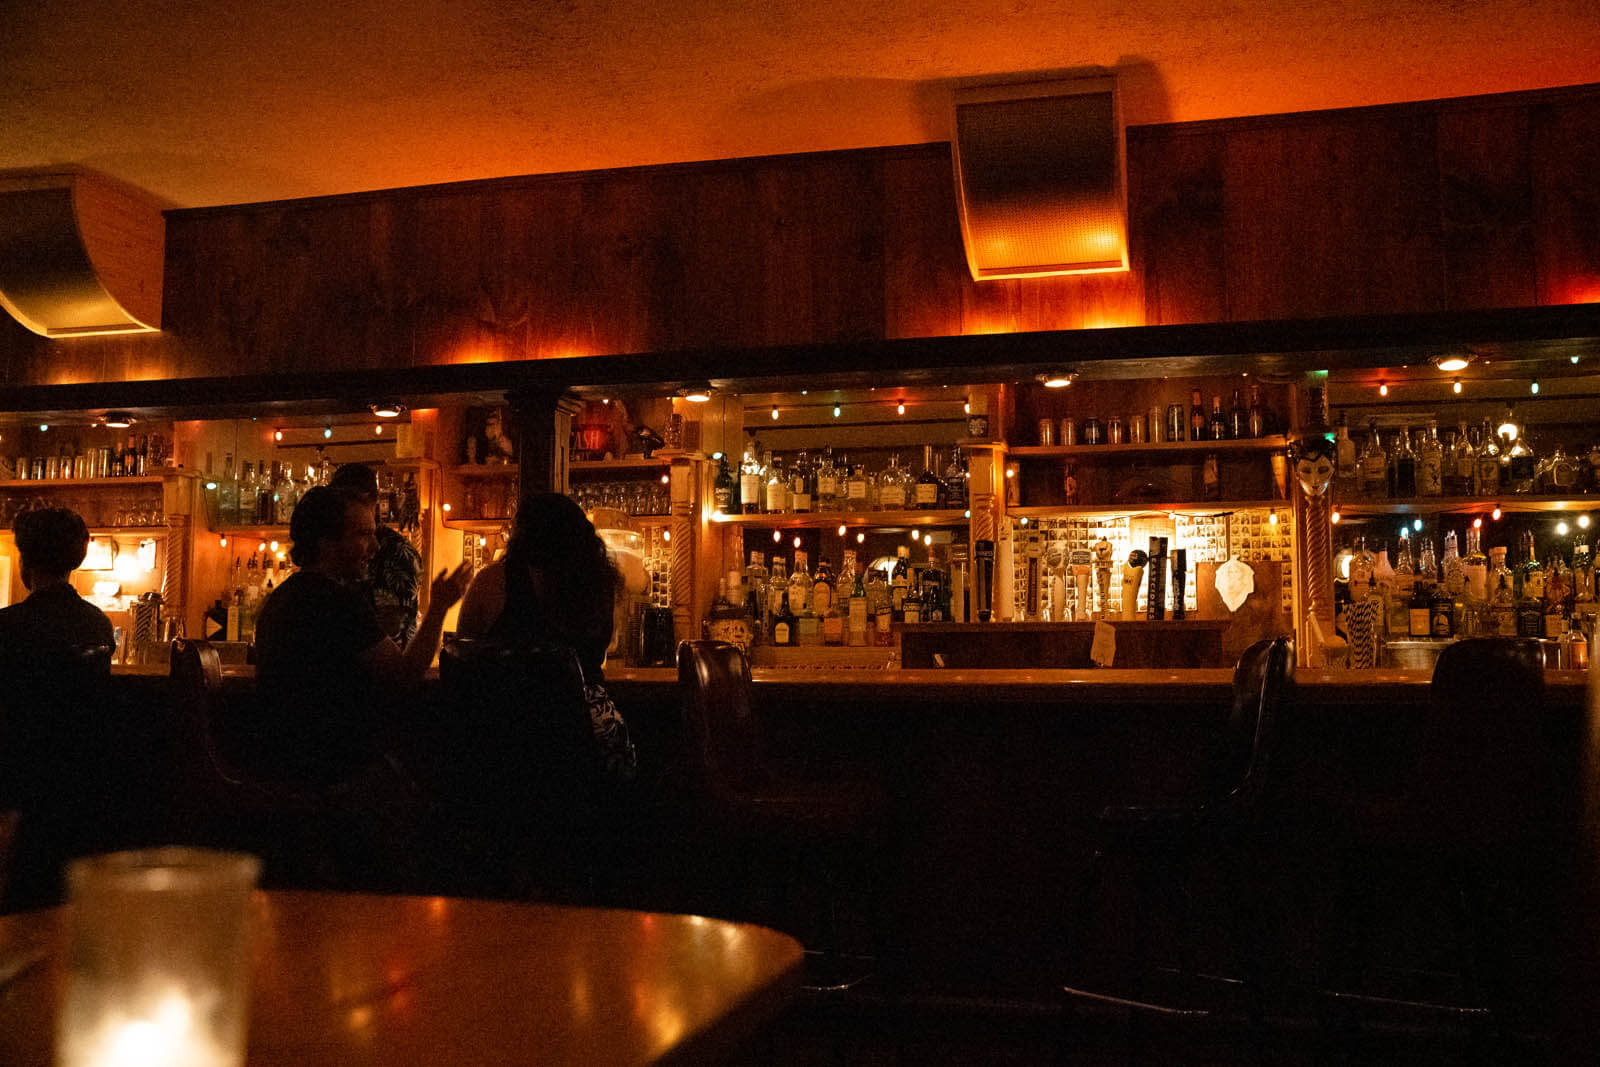 inside the Coyote Club bar in Bed Stuy Brooklyn